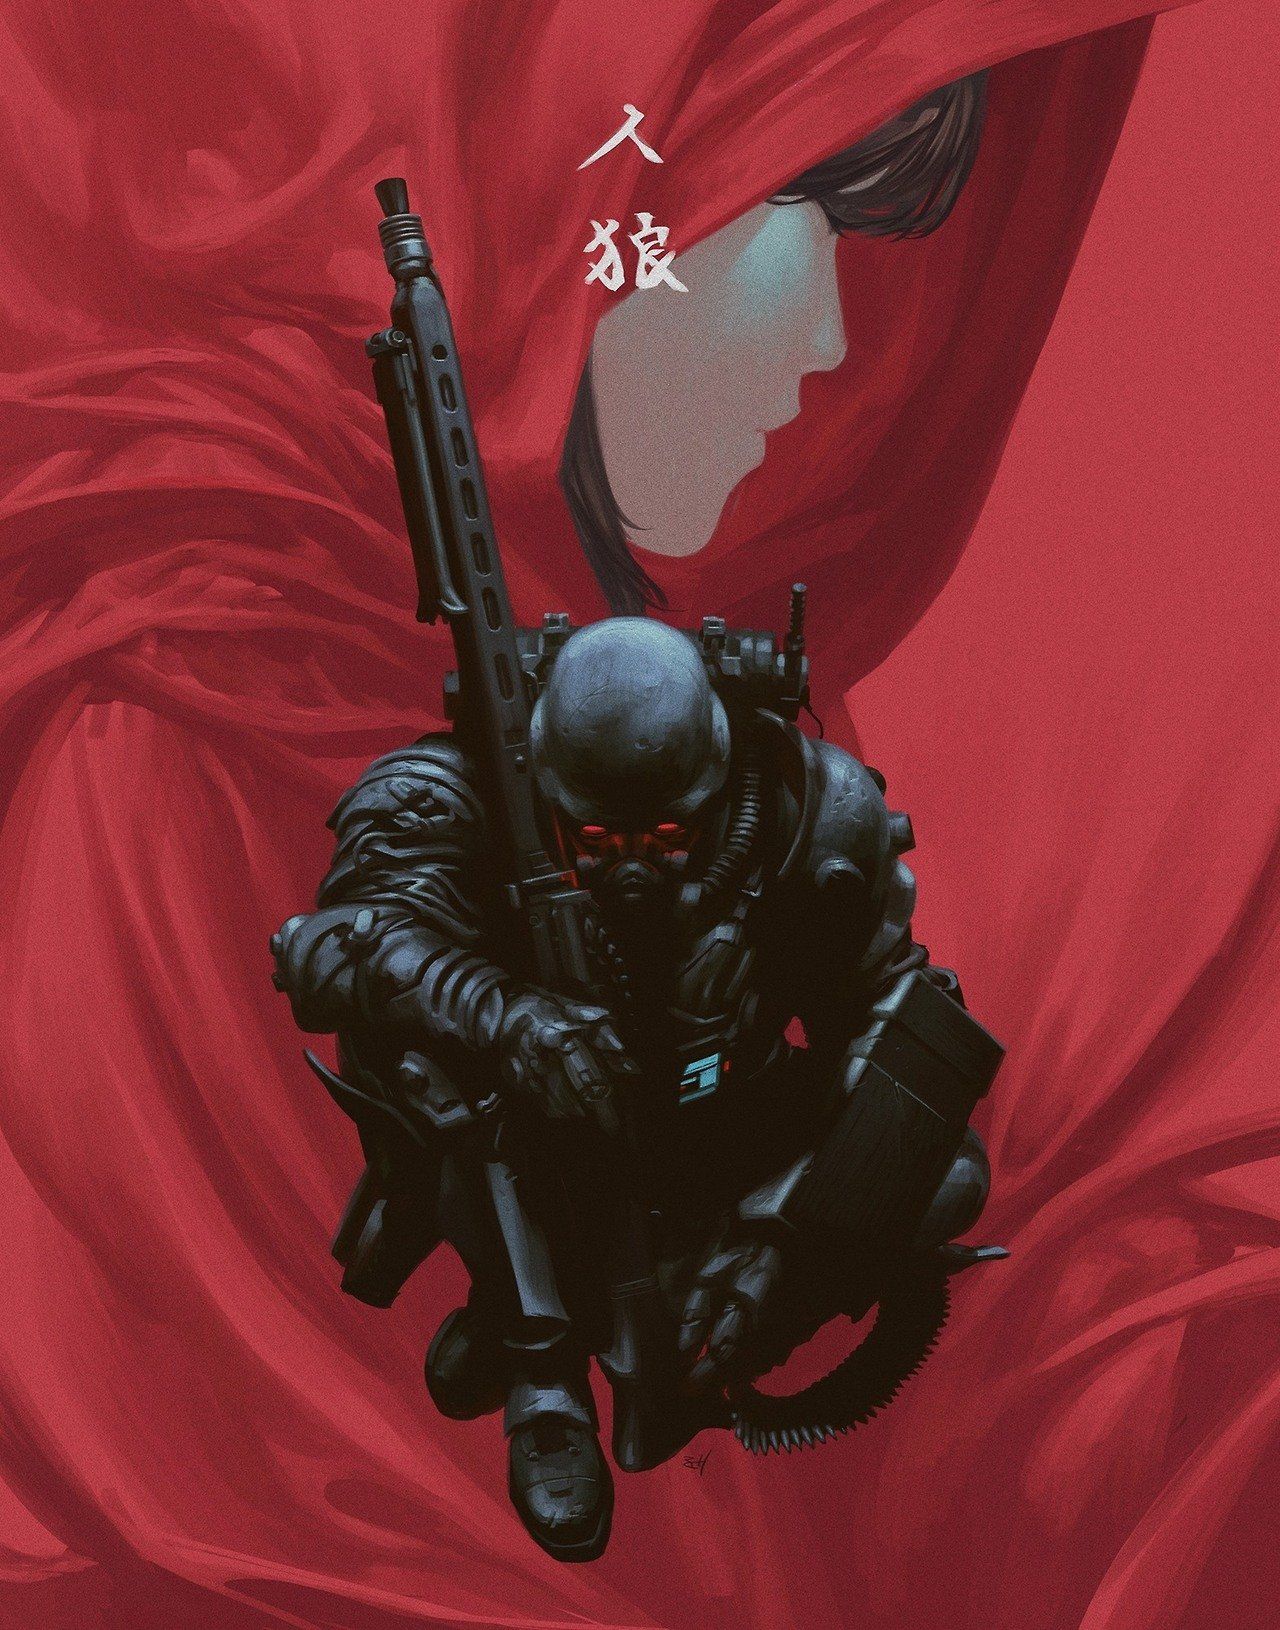 Jin Roh Wallpaper. HD Wallpaper: Anime Character Soldier Poster, Jin Roh, Red Eyes, Black, Dark